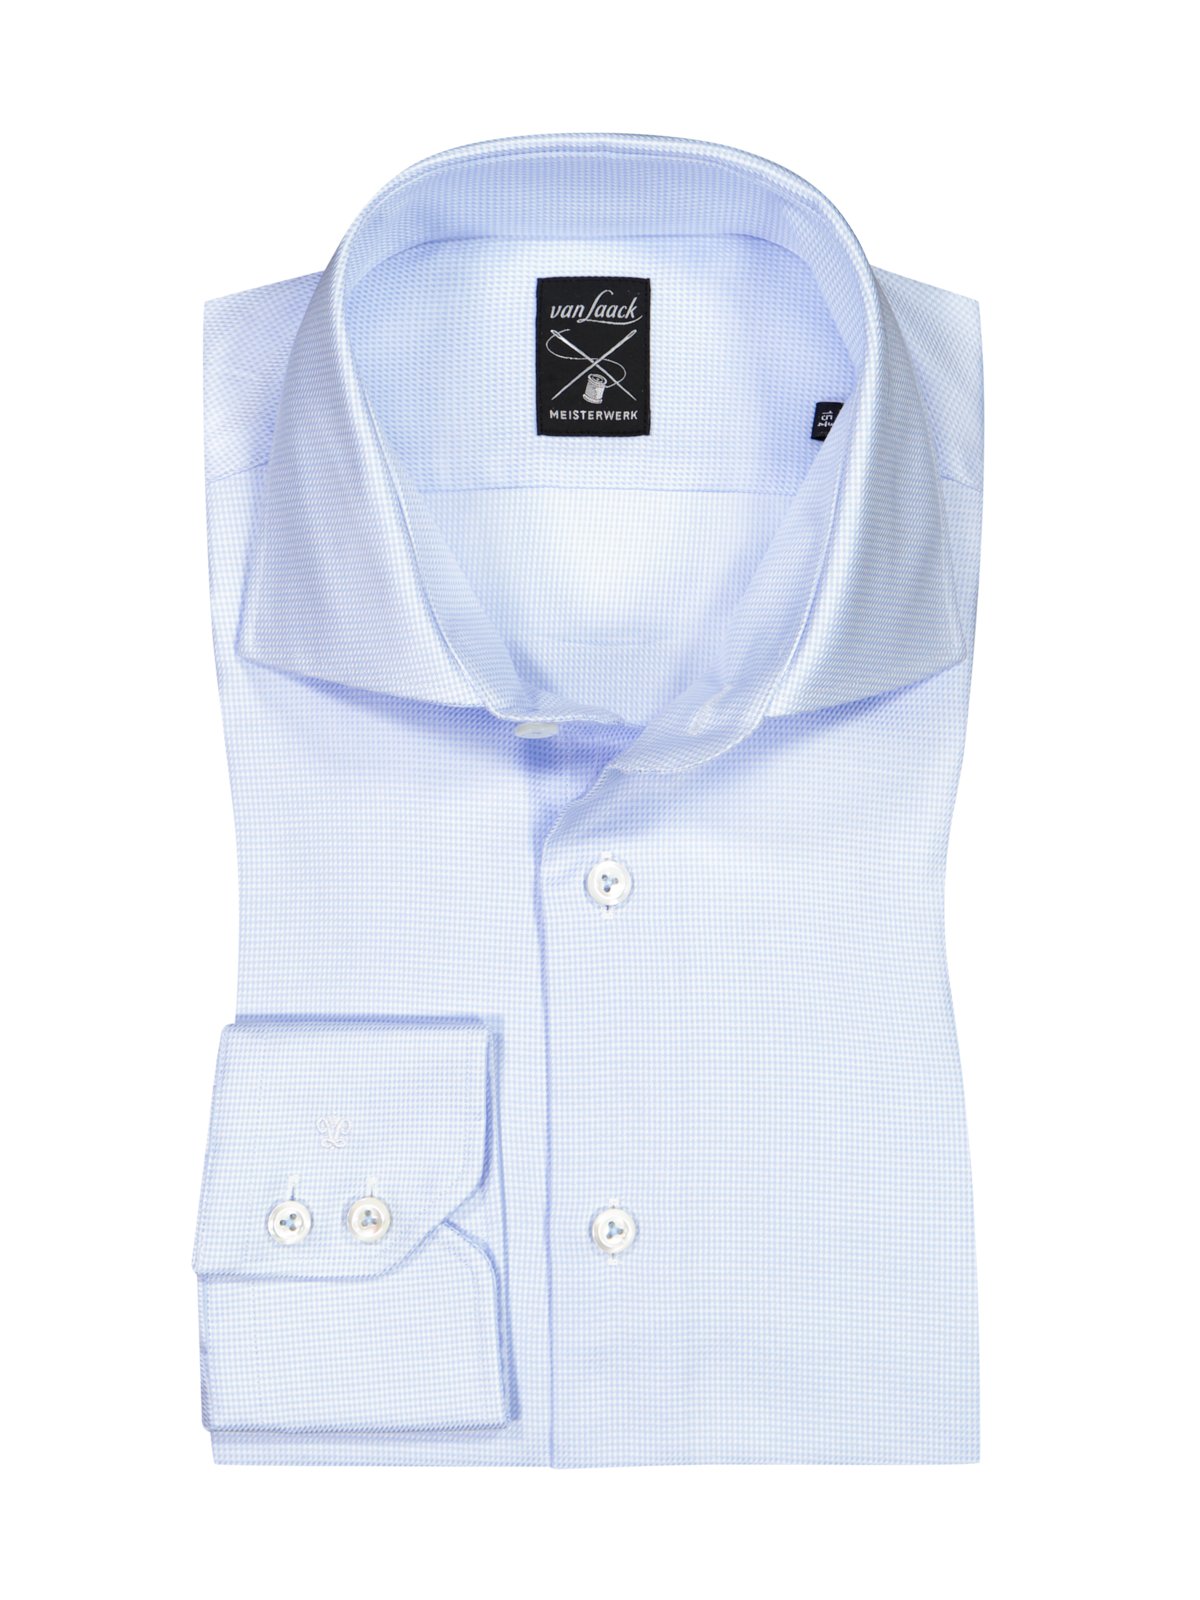 Van Laack Hemd aus Baumwolle mit filigranem Muster, Tailored Fit product